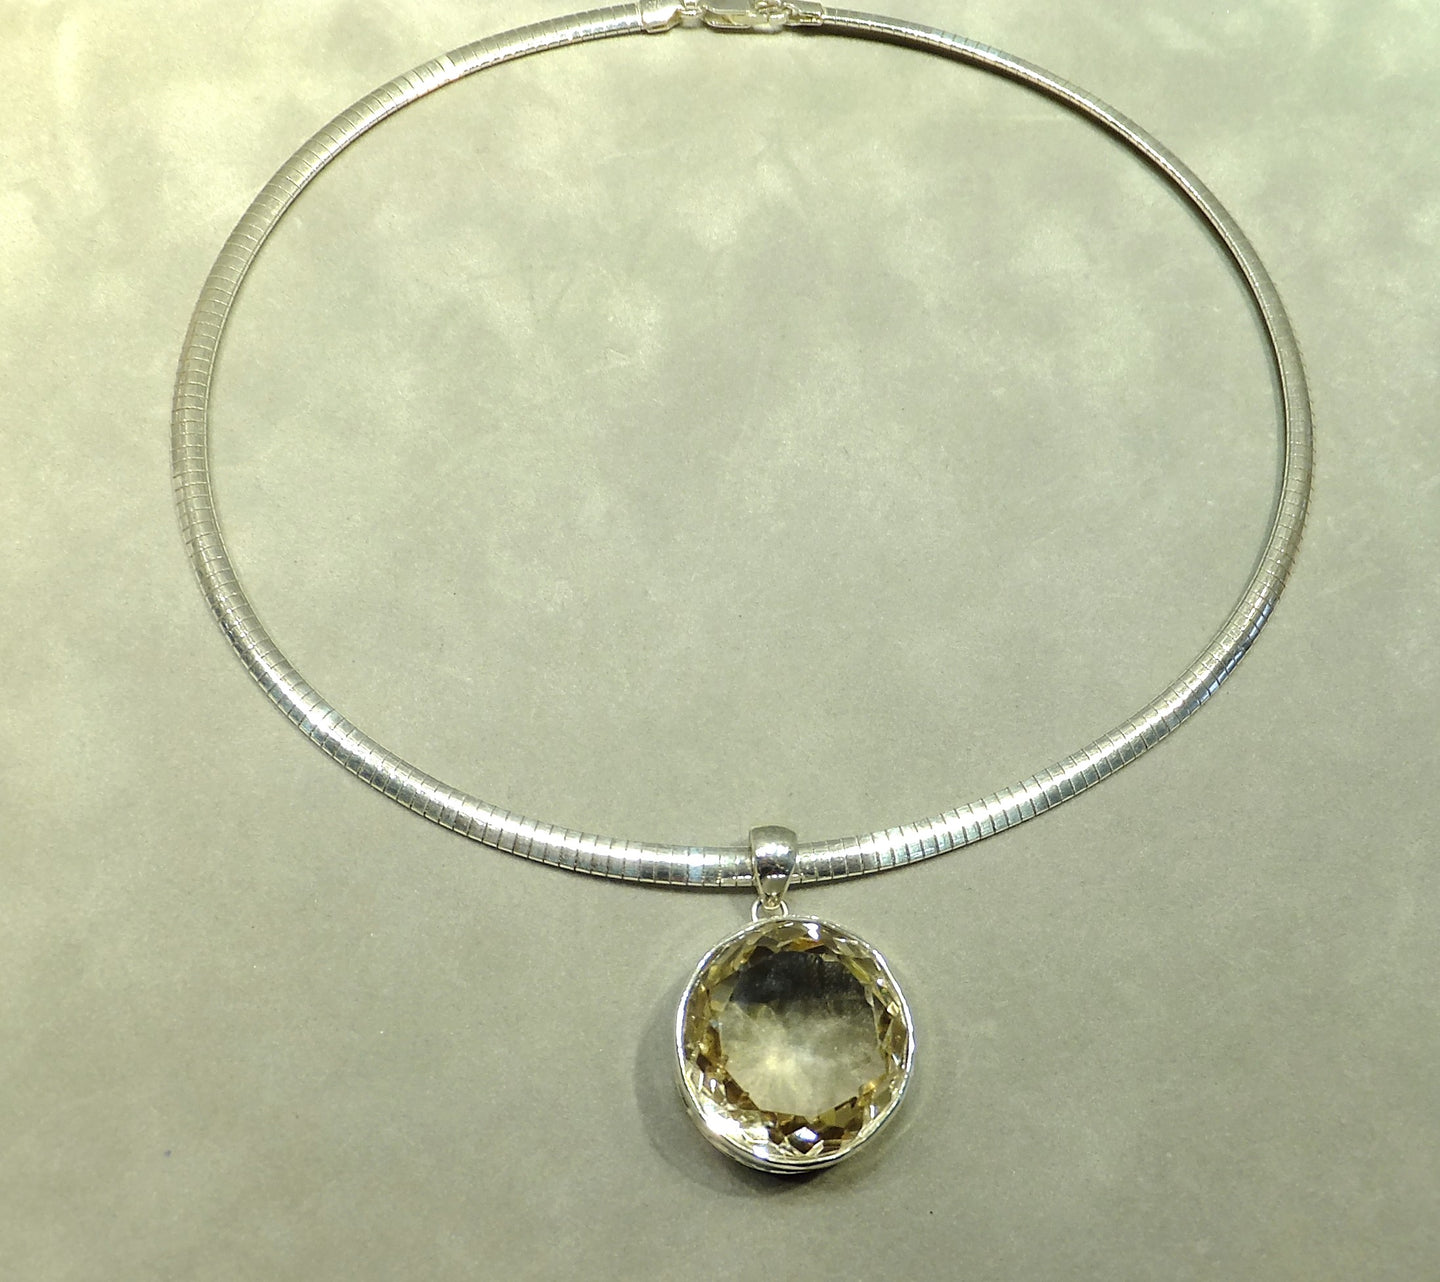 Smokey quartz gemstone necklace